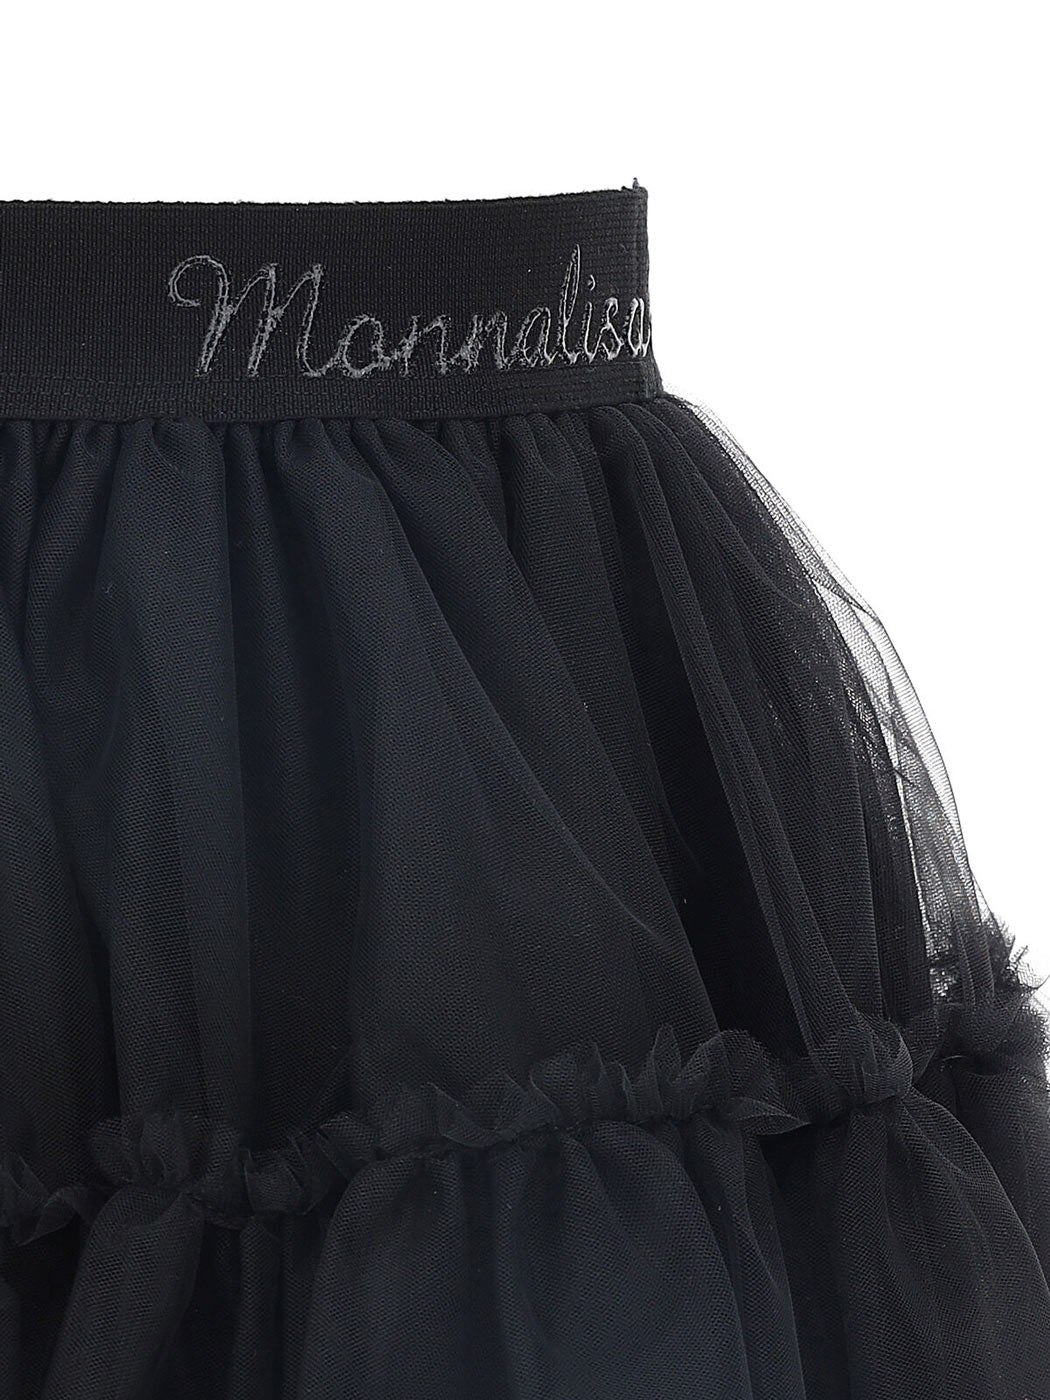 MONNALISA Μαύρη Παιδική Φούστα από τούλι-17AGON